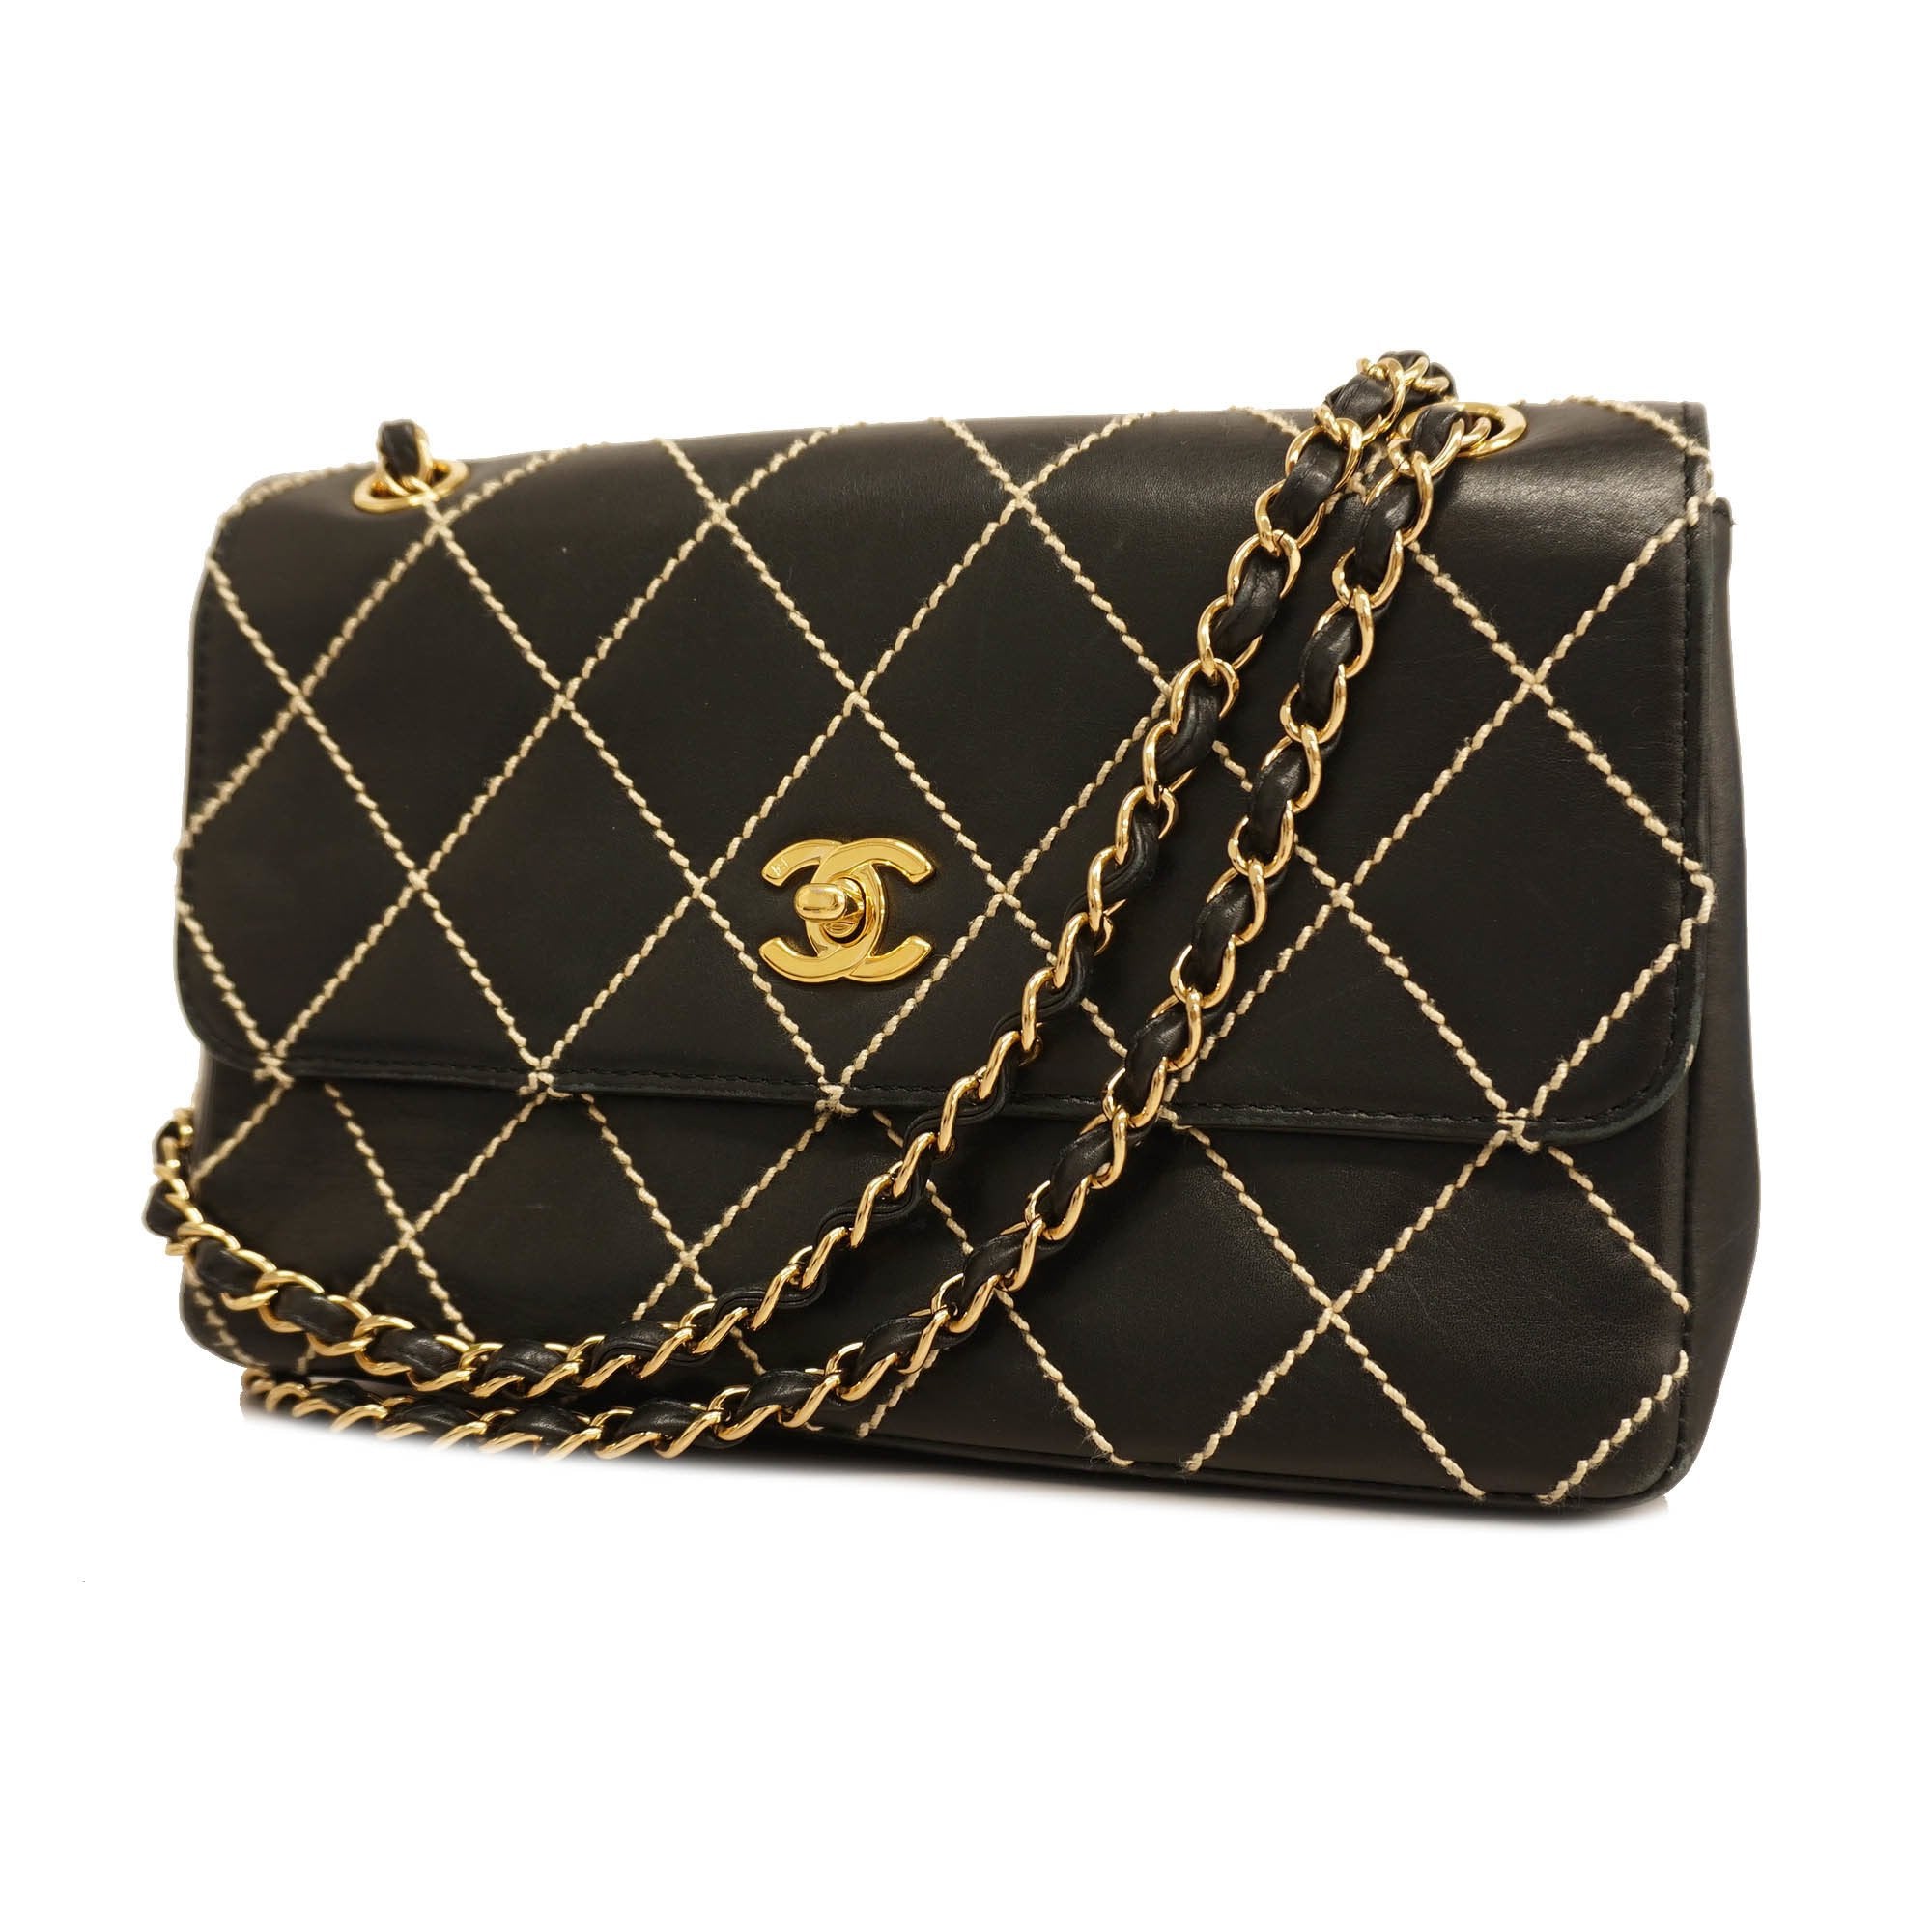 Chanel shoulder bag wild stitch W chain leather black gold metal